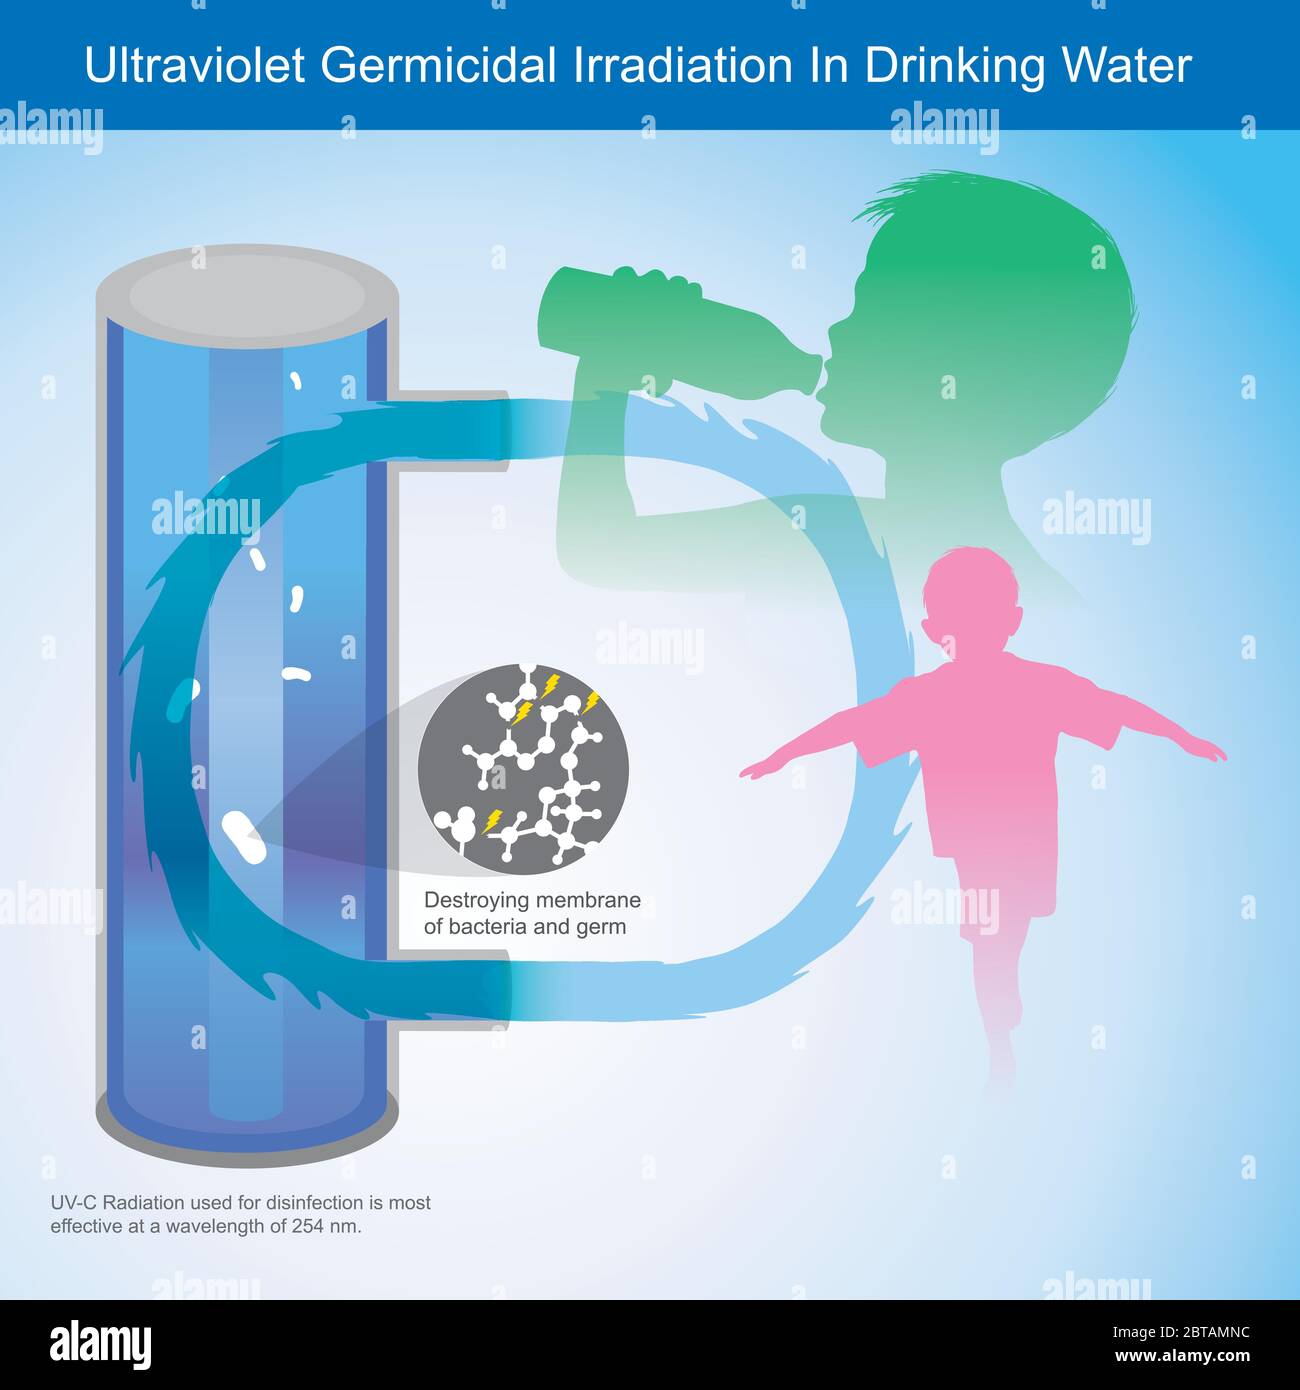 Ultraviolet Germicidal Irradiation In Drinking Water. Illustration explain Ultraviolet Light (UV-C) light this is can kill membrane of bacteria Stock Vector